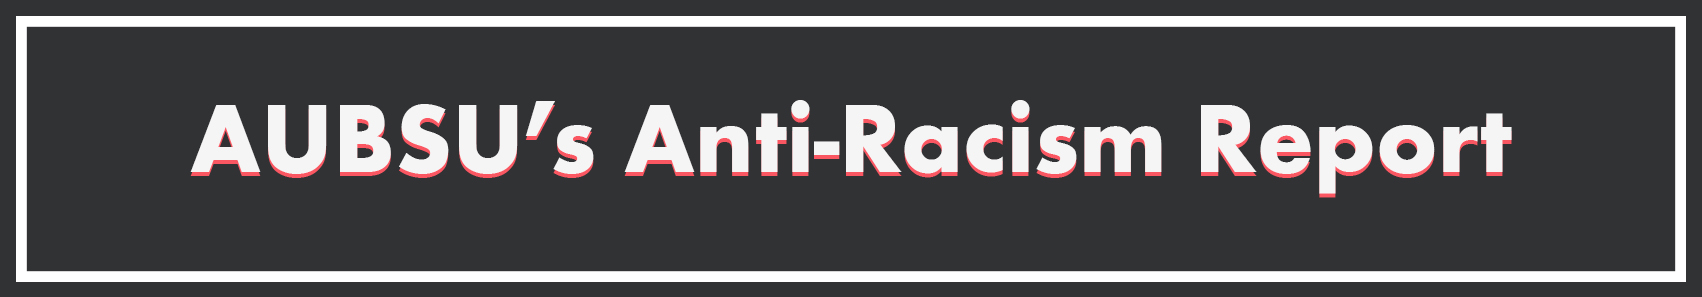 AUB's Anti-Racism Report Link